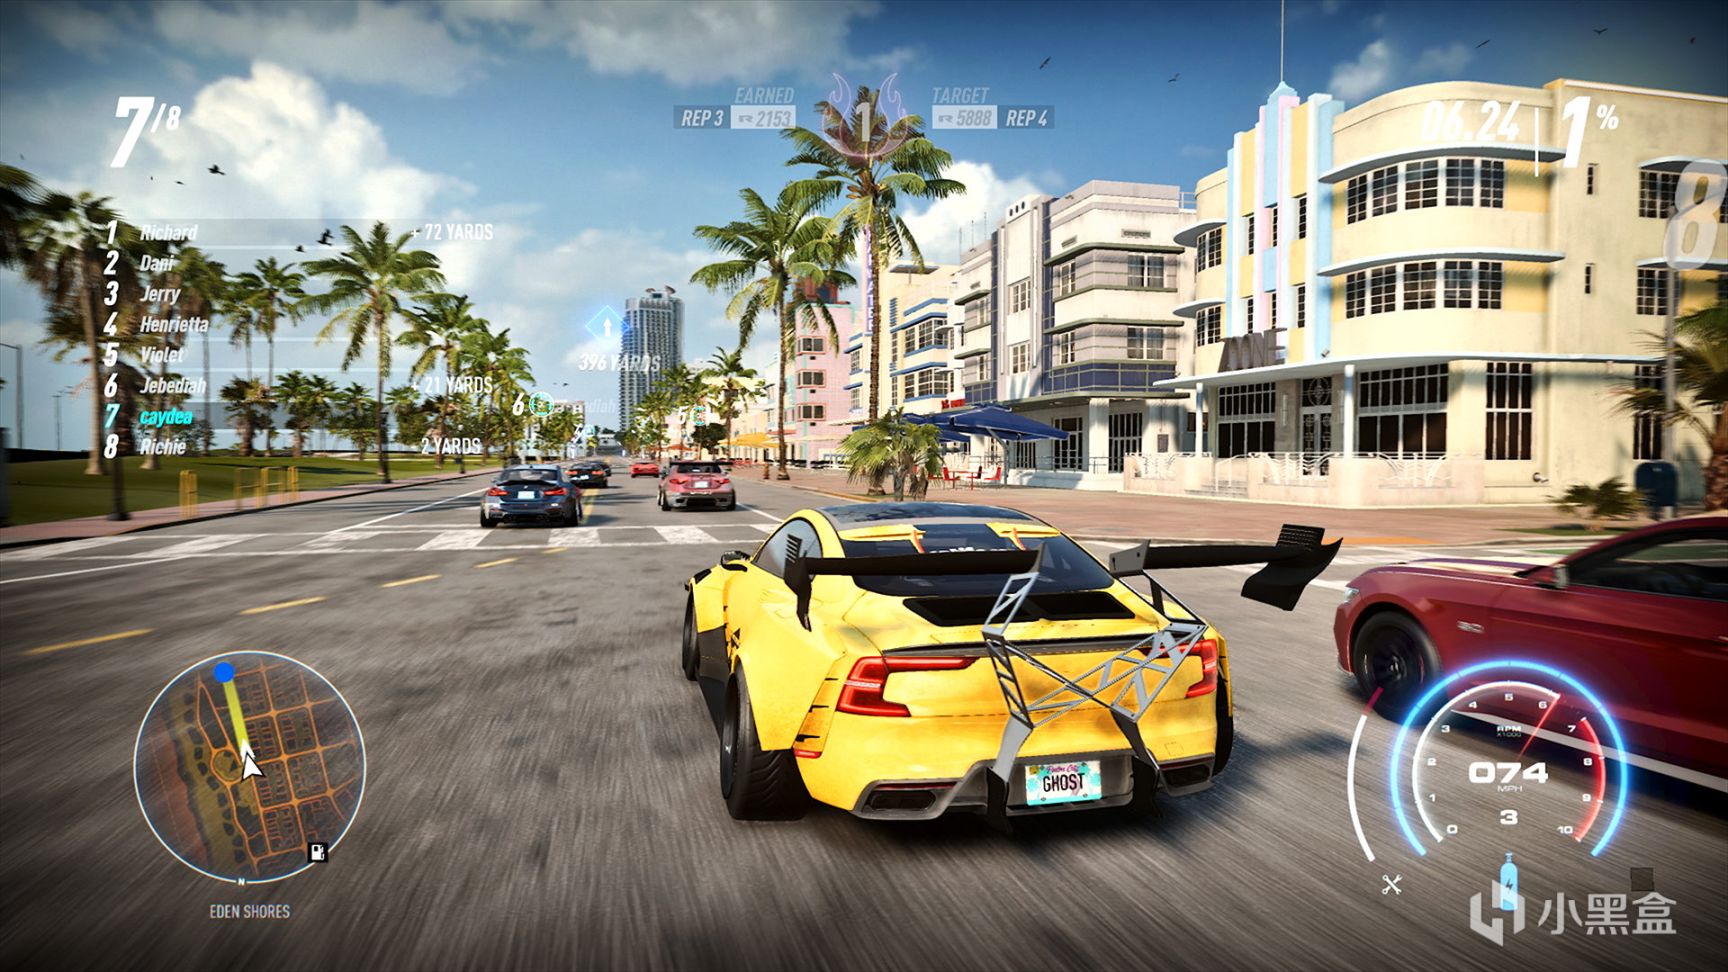 【PC游戏】Steam限时免费领取《极品飞车：热度》DLC McLaren F1 黑市货品-第3张